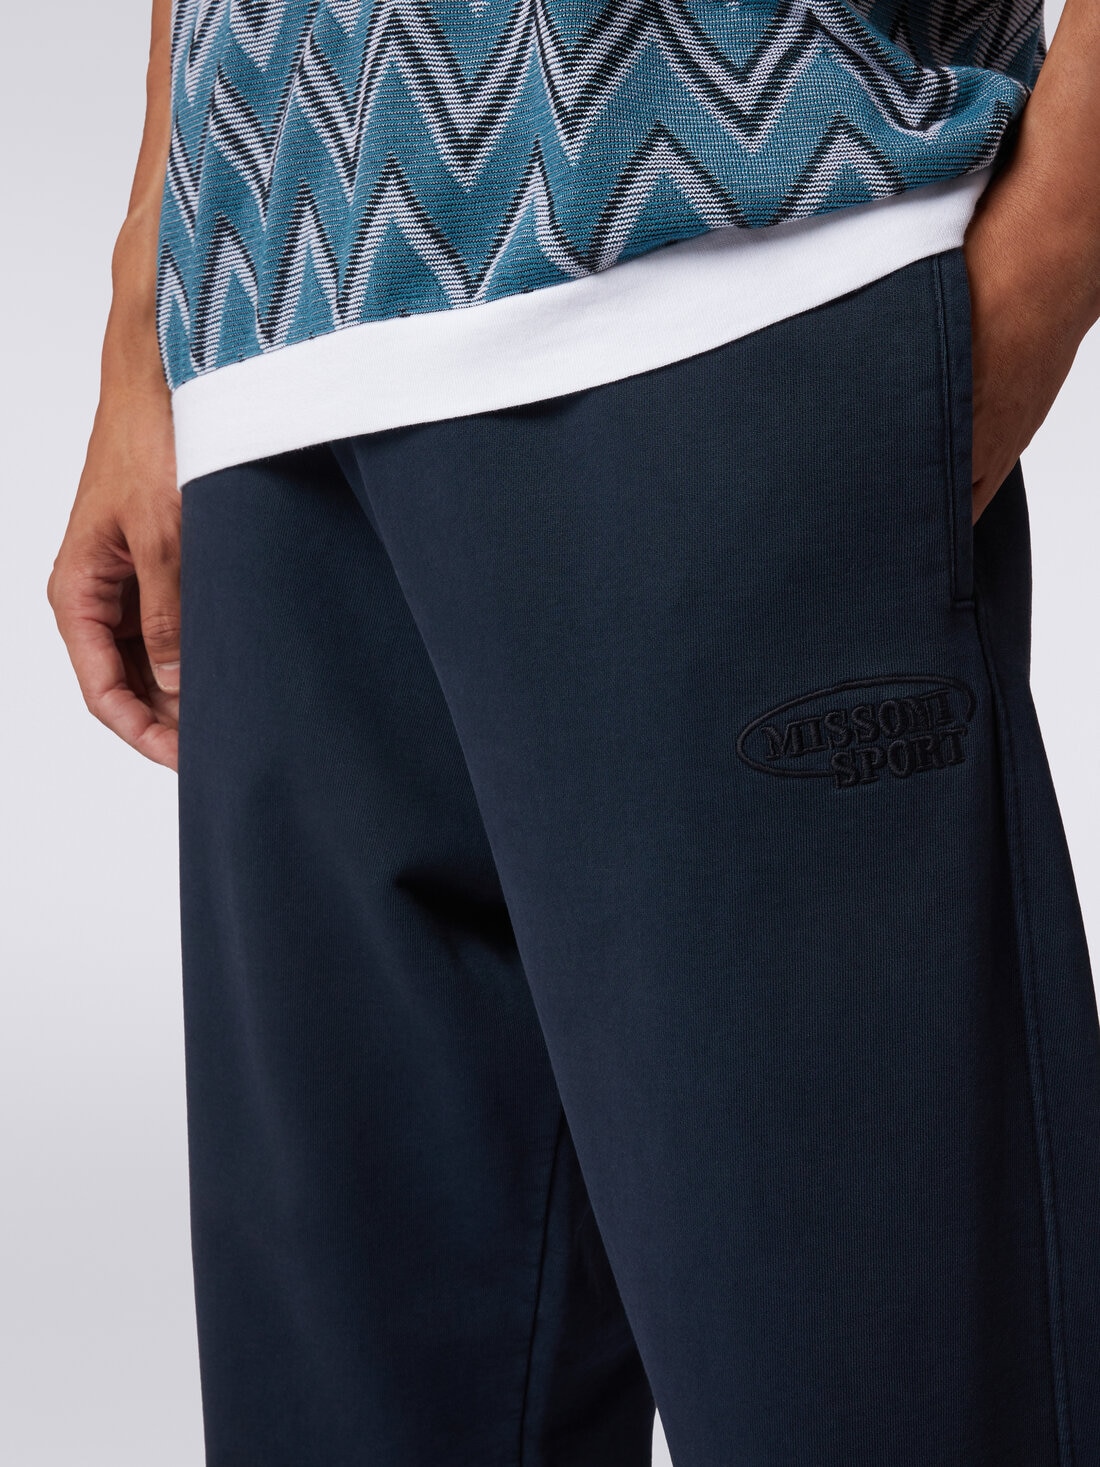 Trousers in cotton fleece with logo, Navy Blue  - TS24SI00BJ00H0S72EU - 4